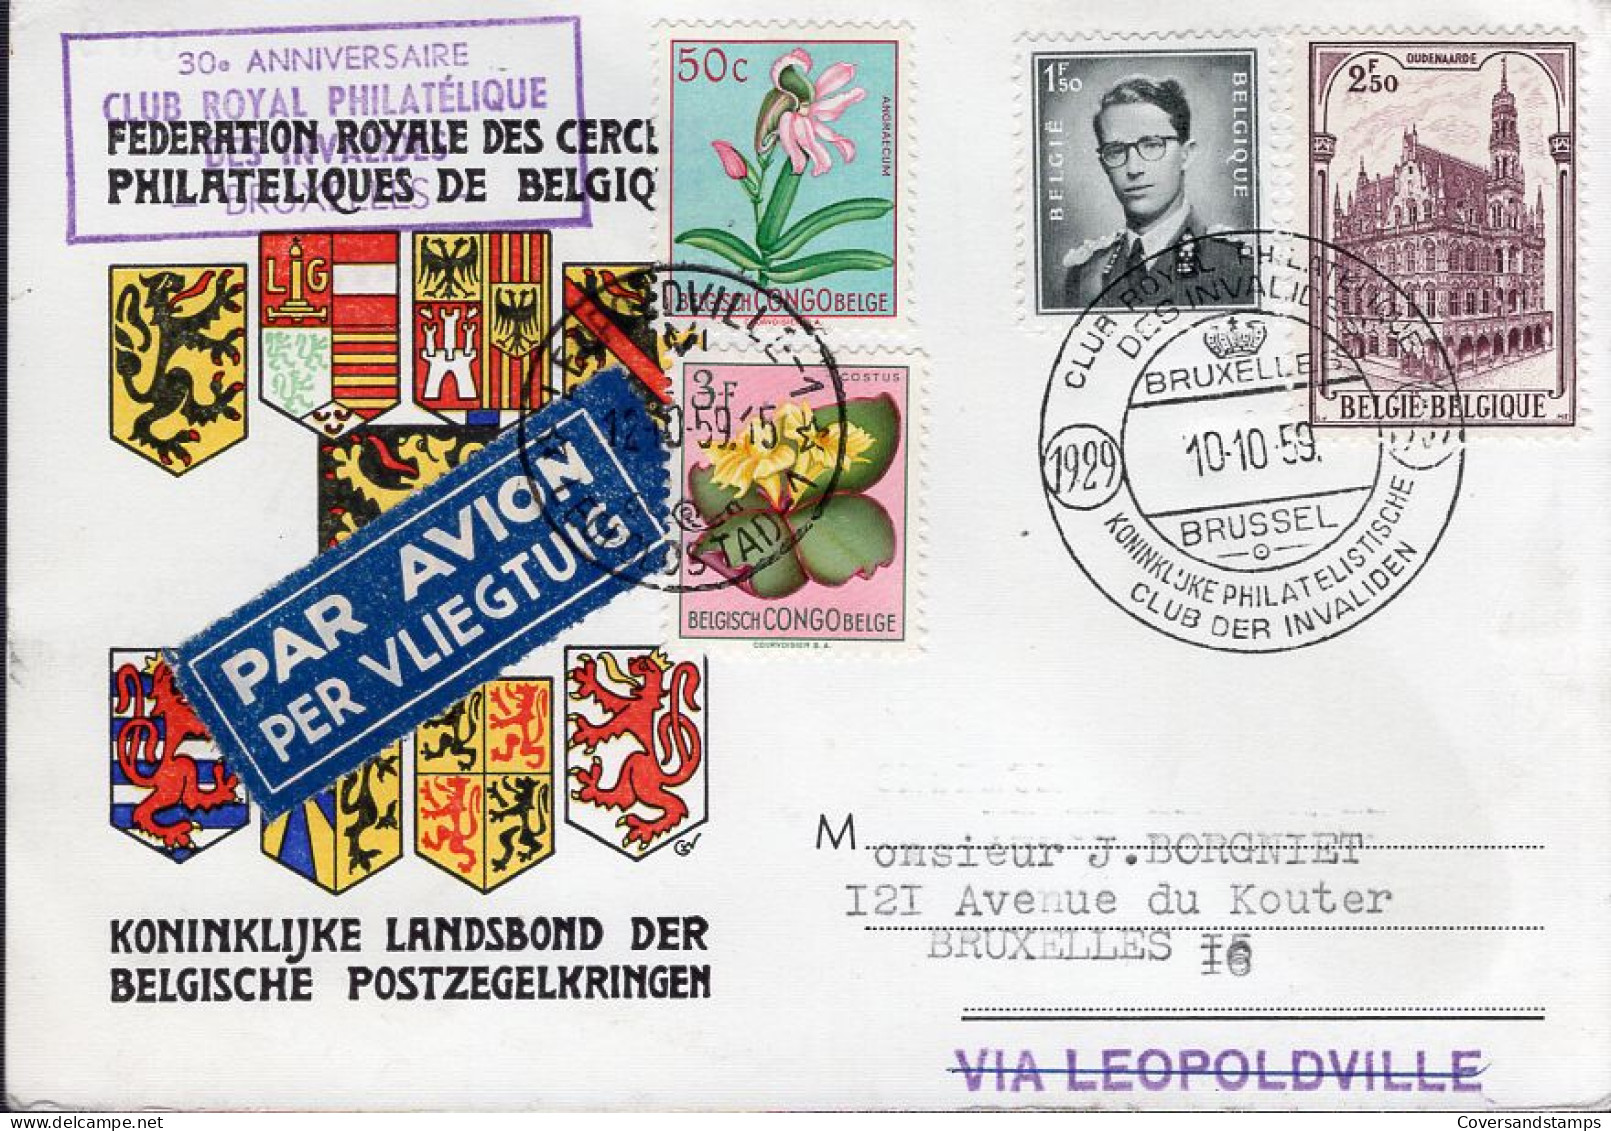  Briefkaart: 30e Anniversaire Club Royal Philatélique Des Invalides - Cartas & Documentos